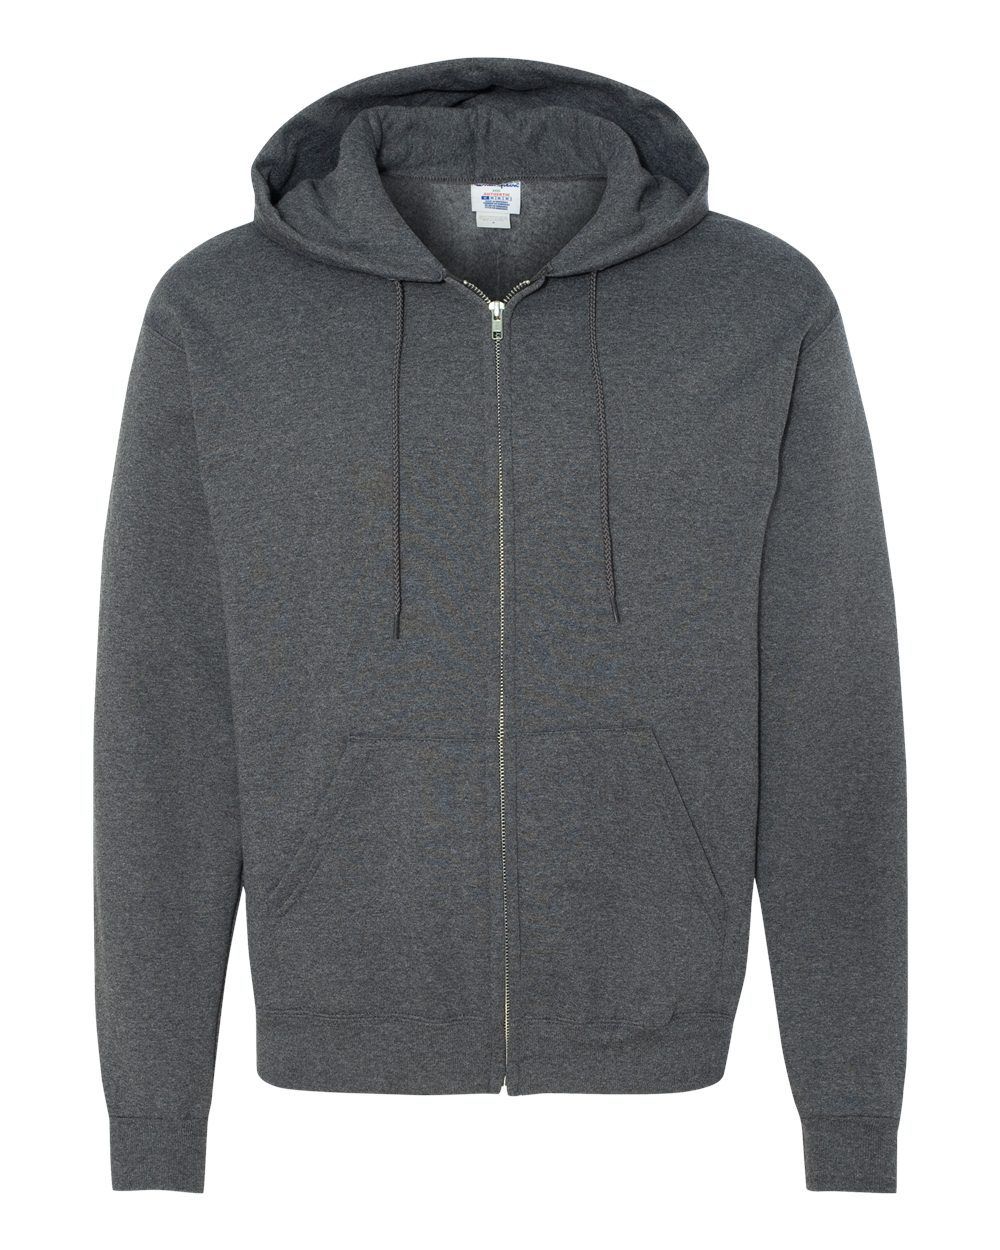 Custom Zip-up Hoodies & Sweatshirts